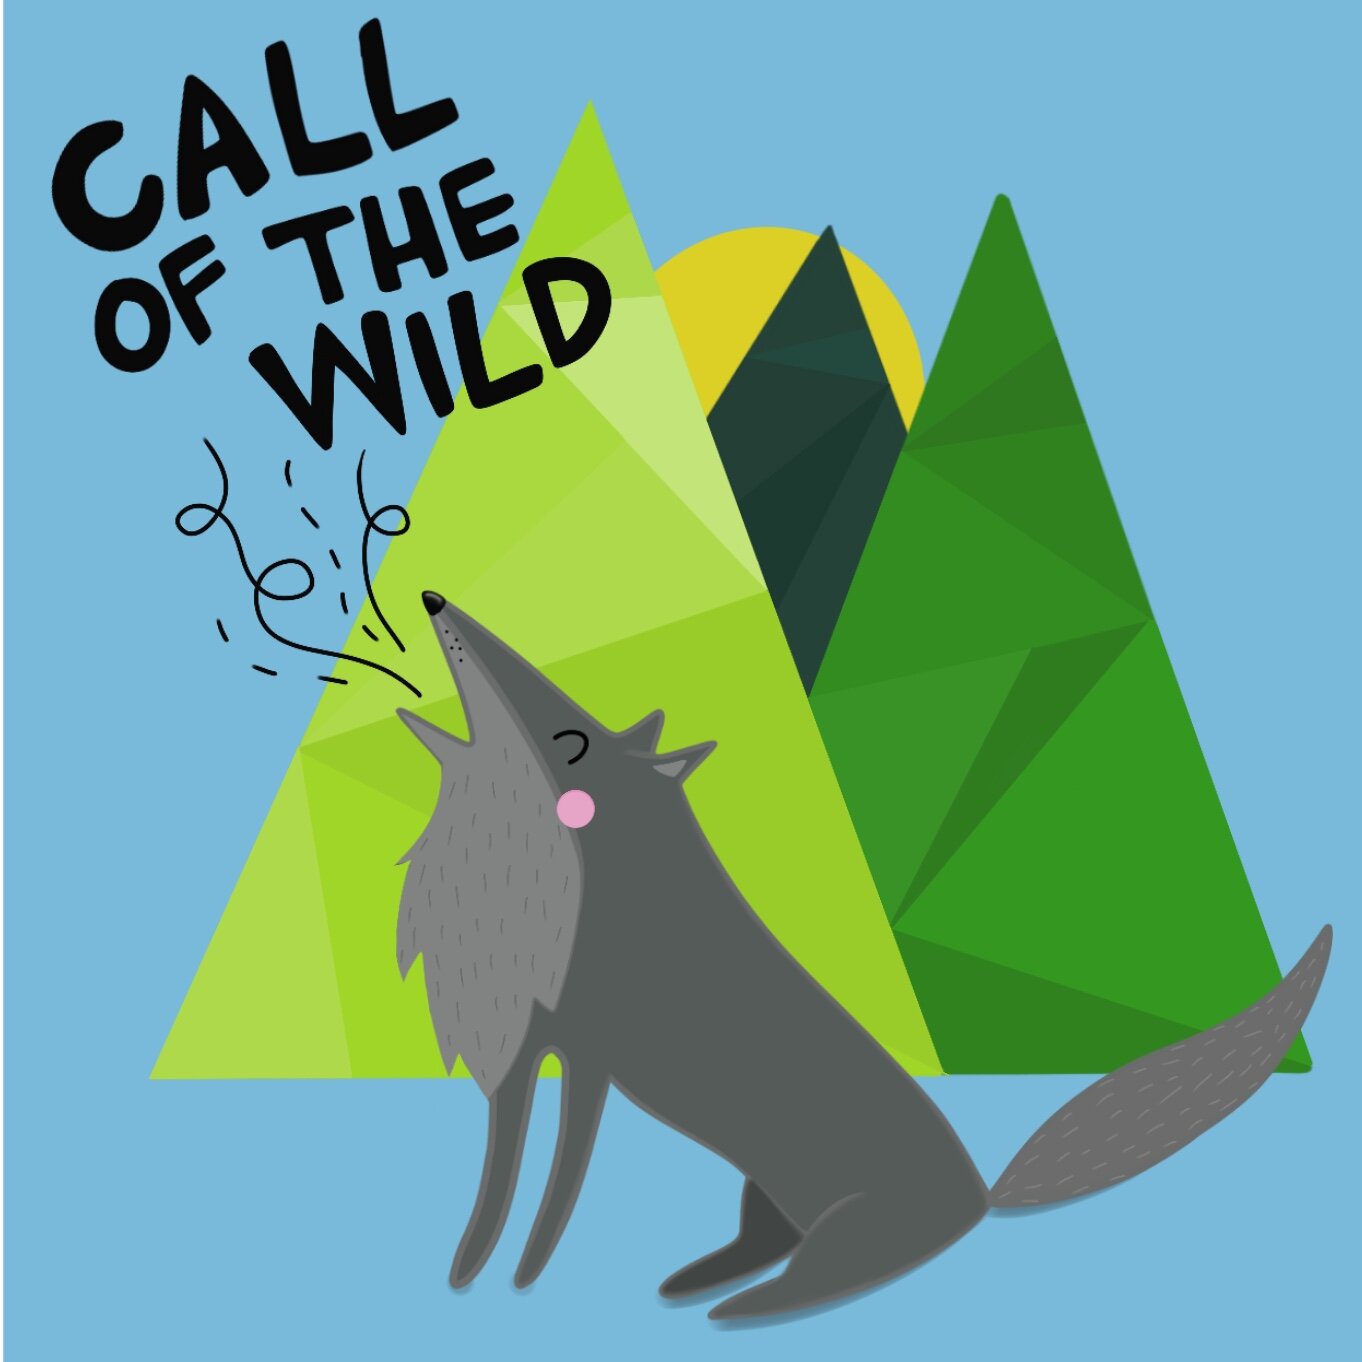 Camp BDA call of the wild .jpg